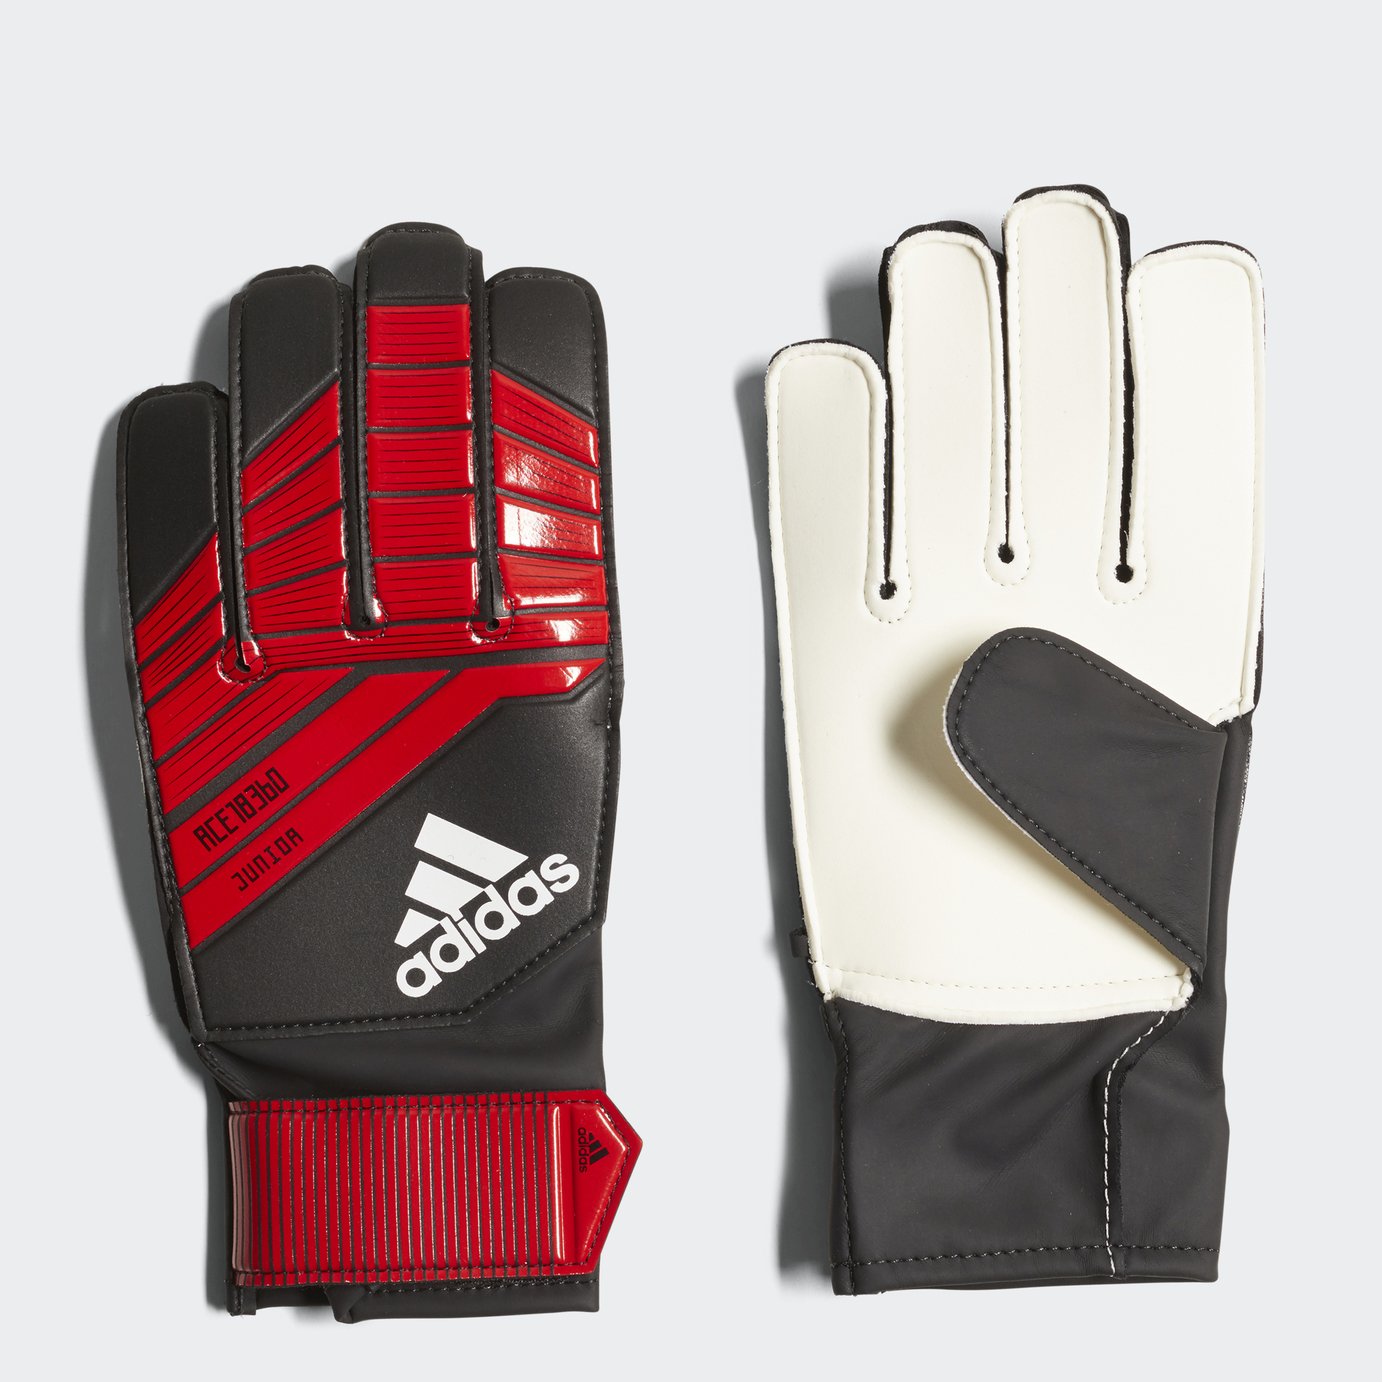 Adidas Predator Junior Goalkeeping Gloves Reviews